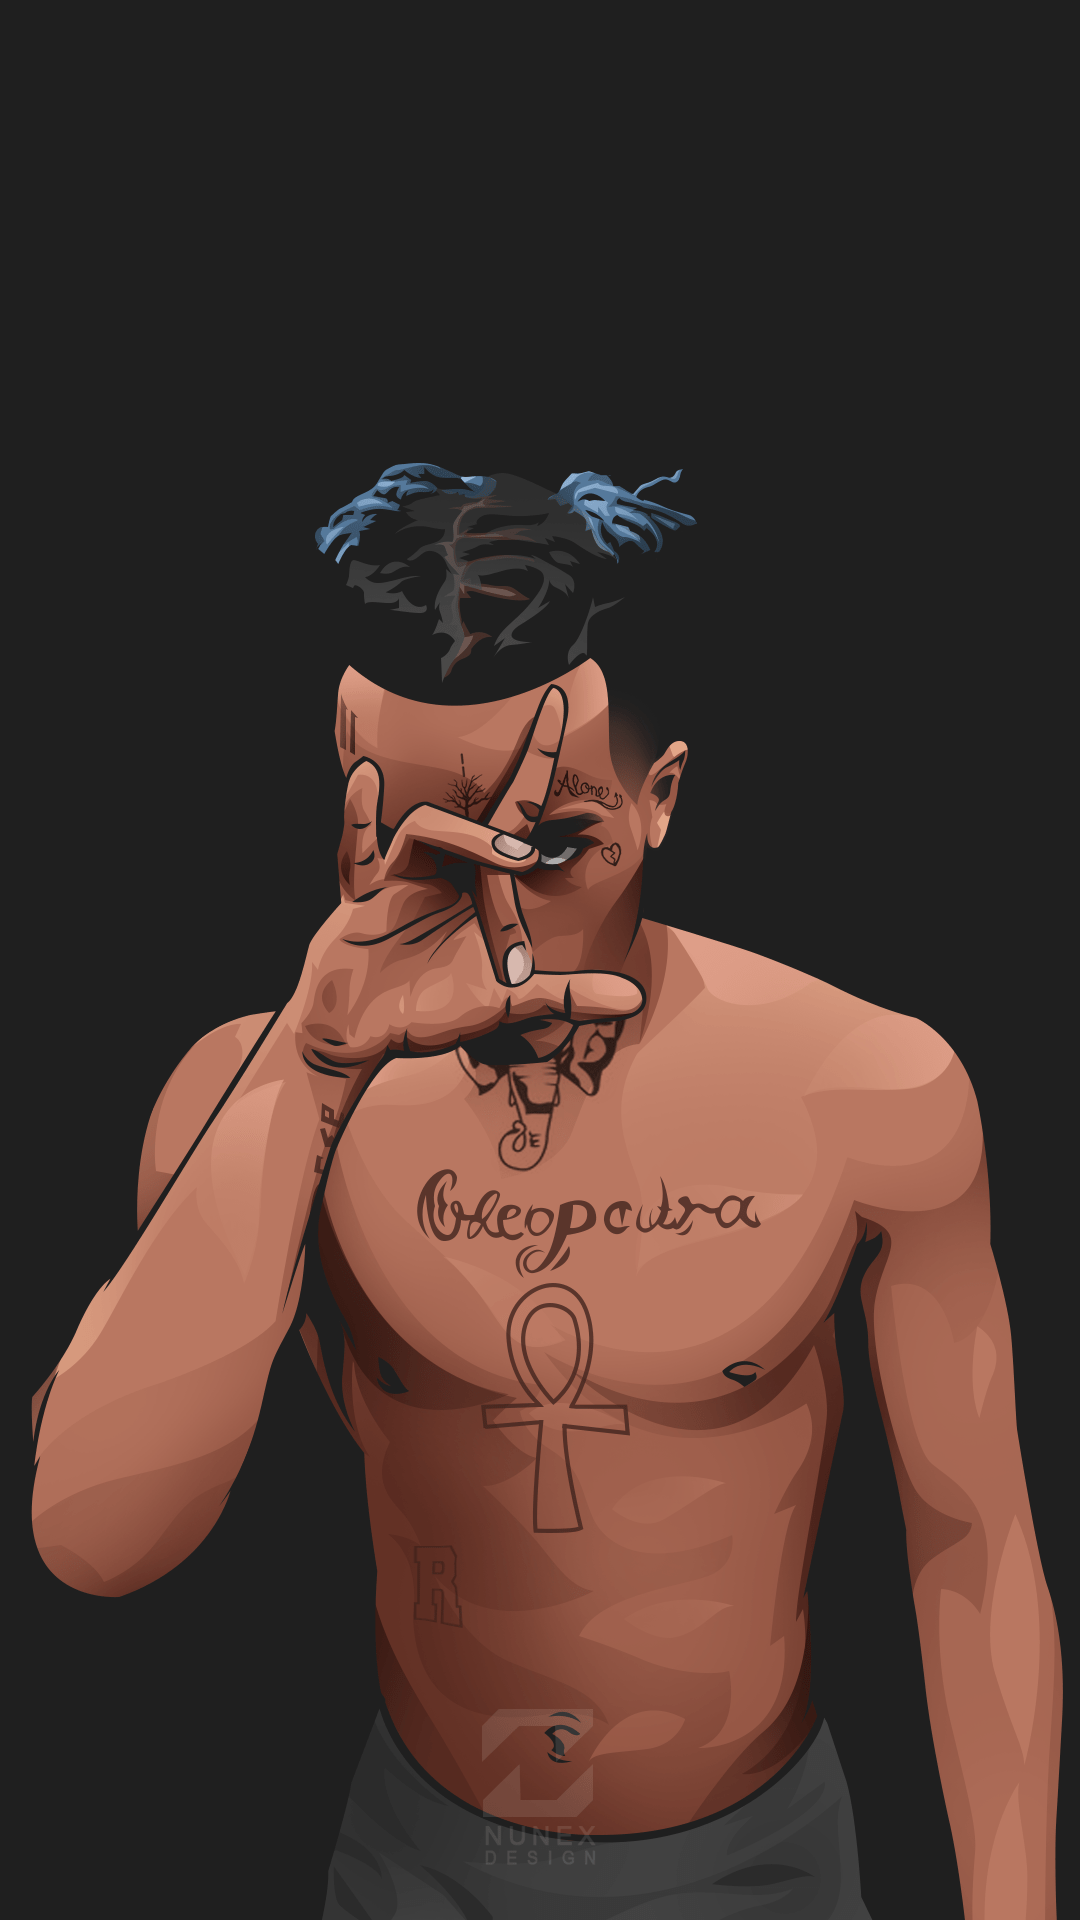 A shirtless XXXTentacion with tattoos on his chest and neck. - XXXTentacion